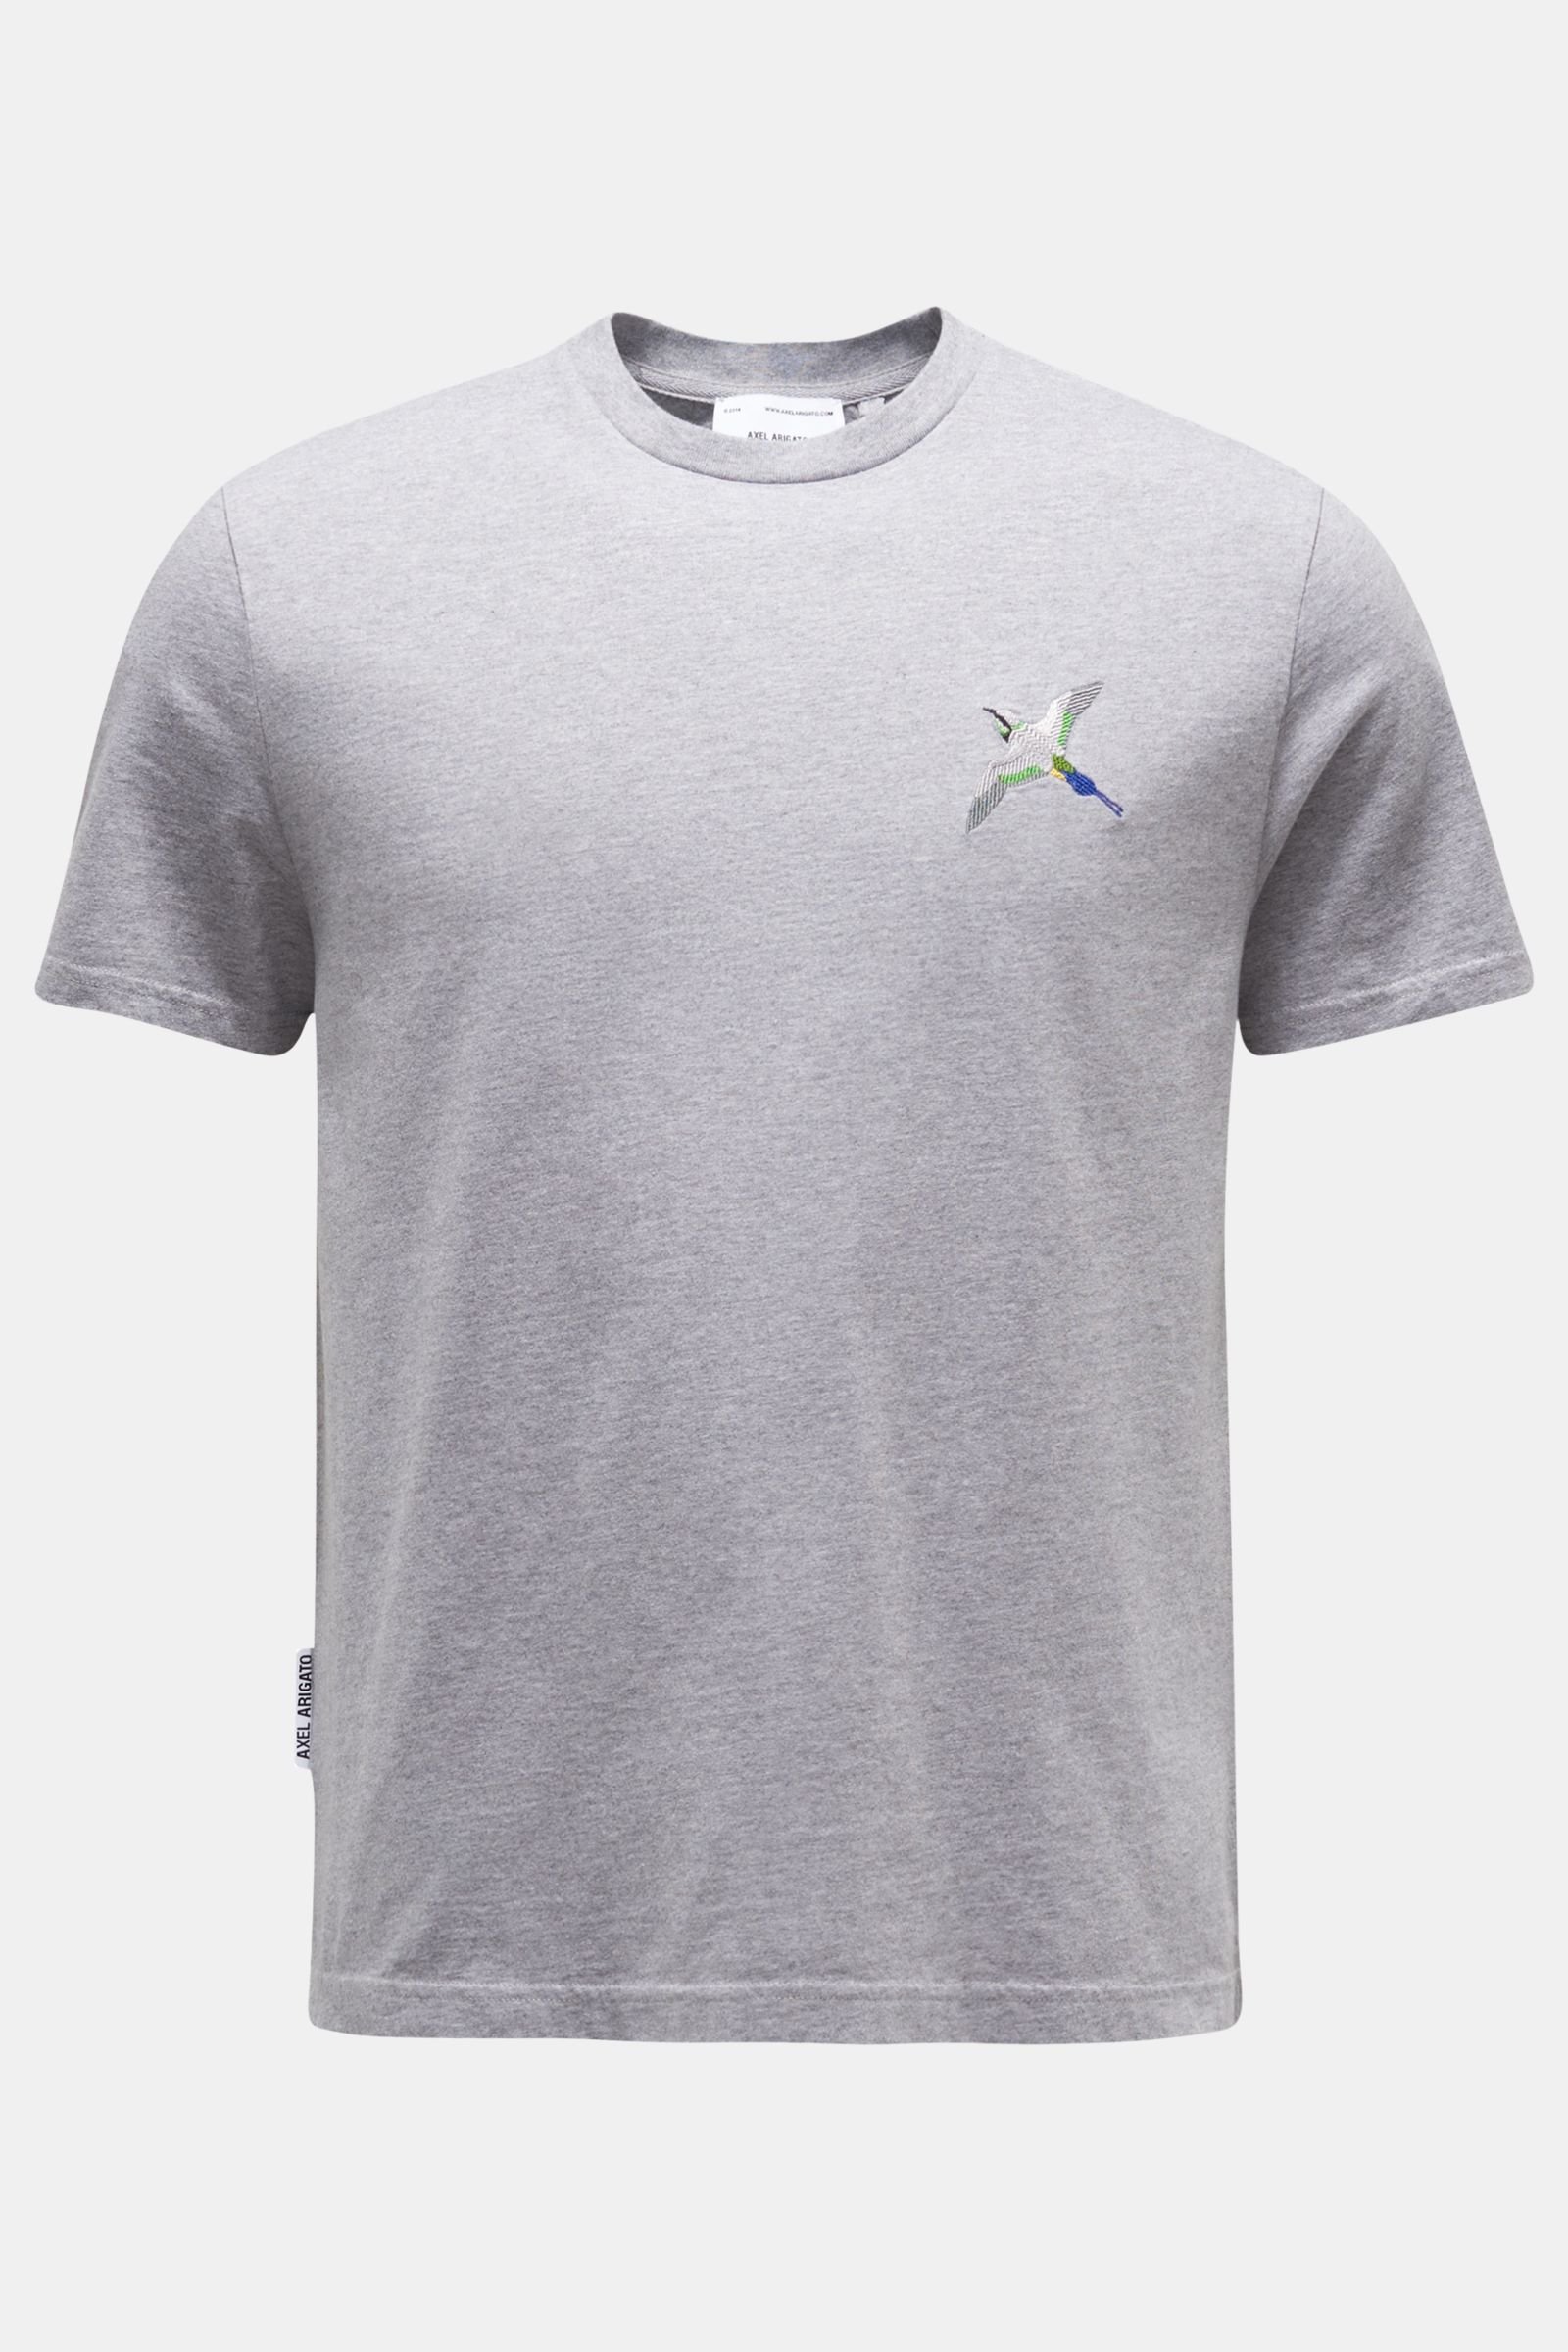 Crew neck T-shirt 'Single Bee Eater' grey